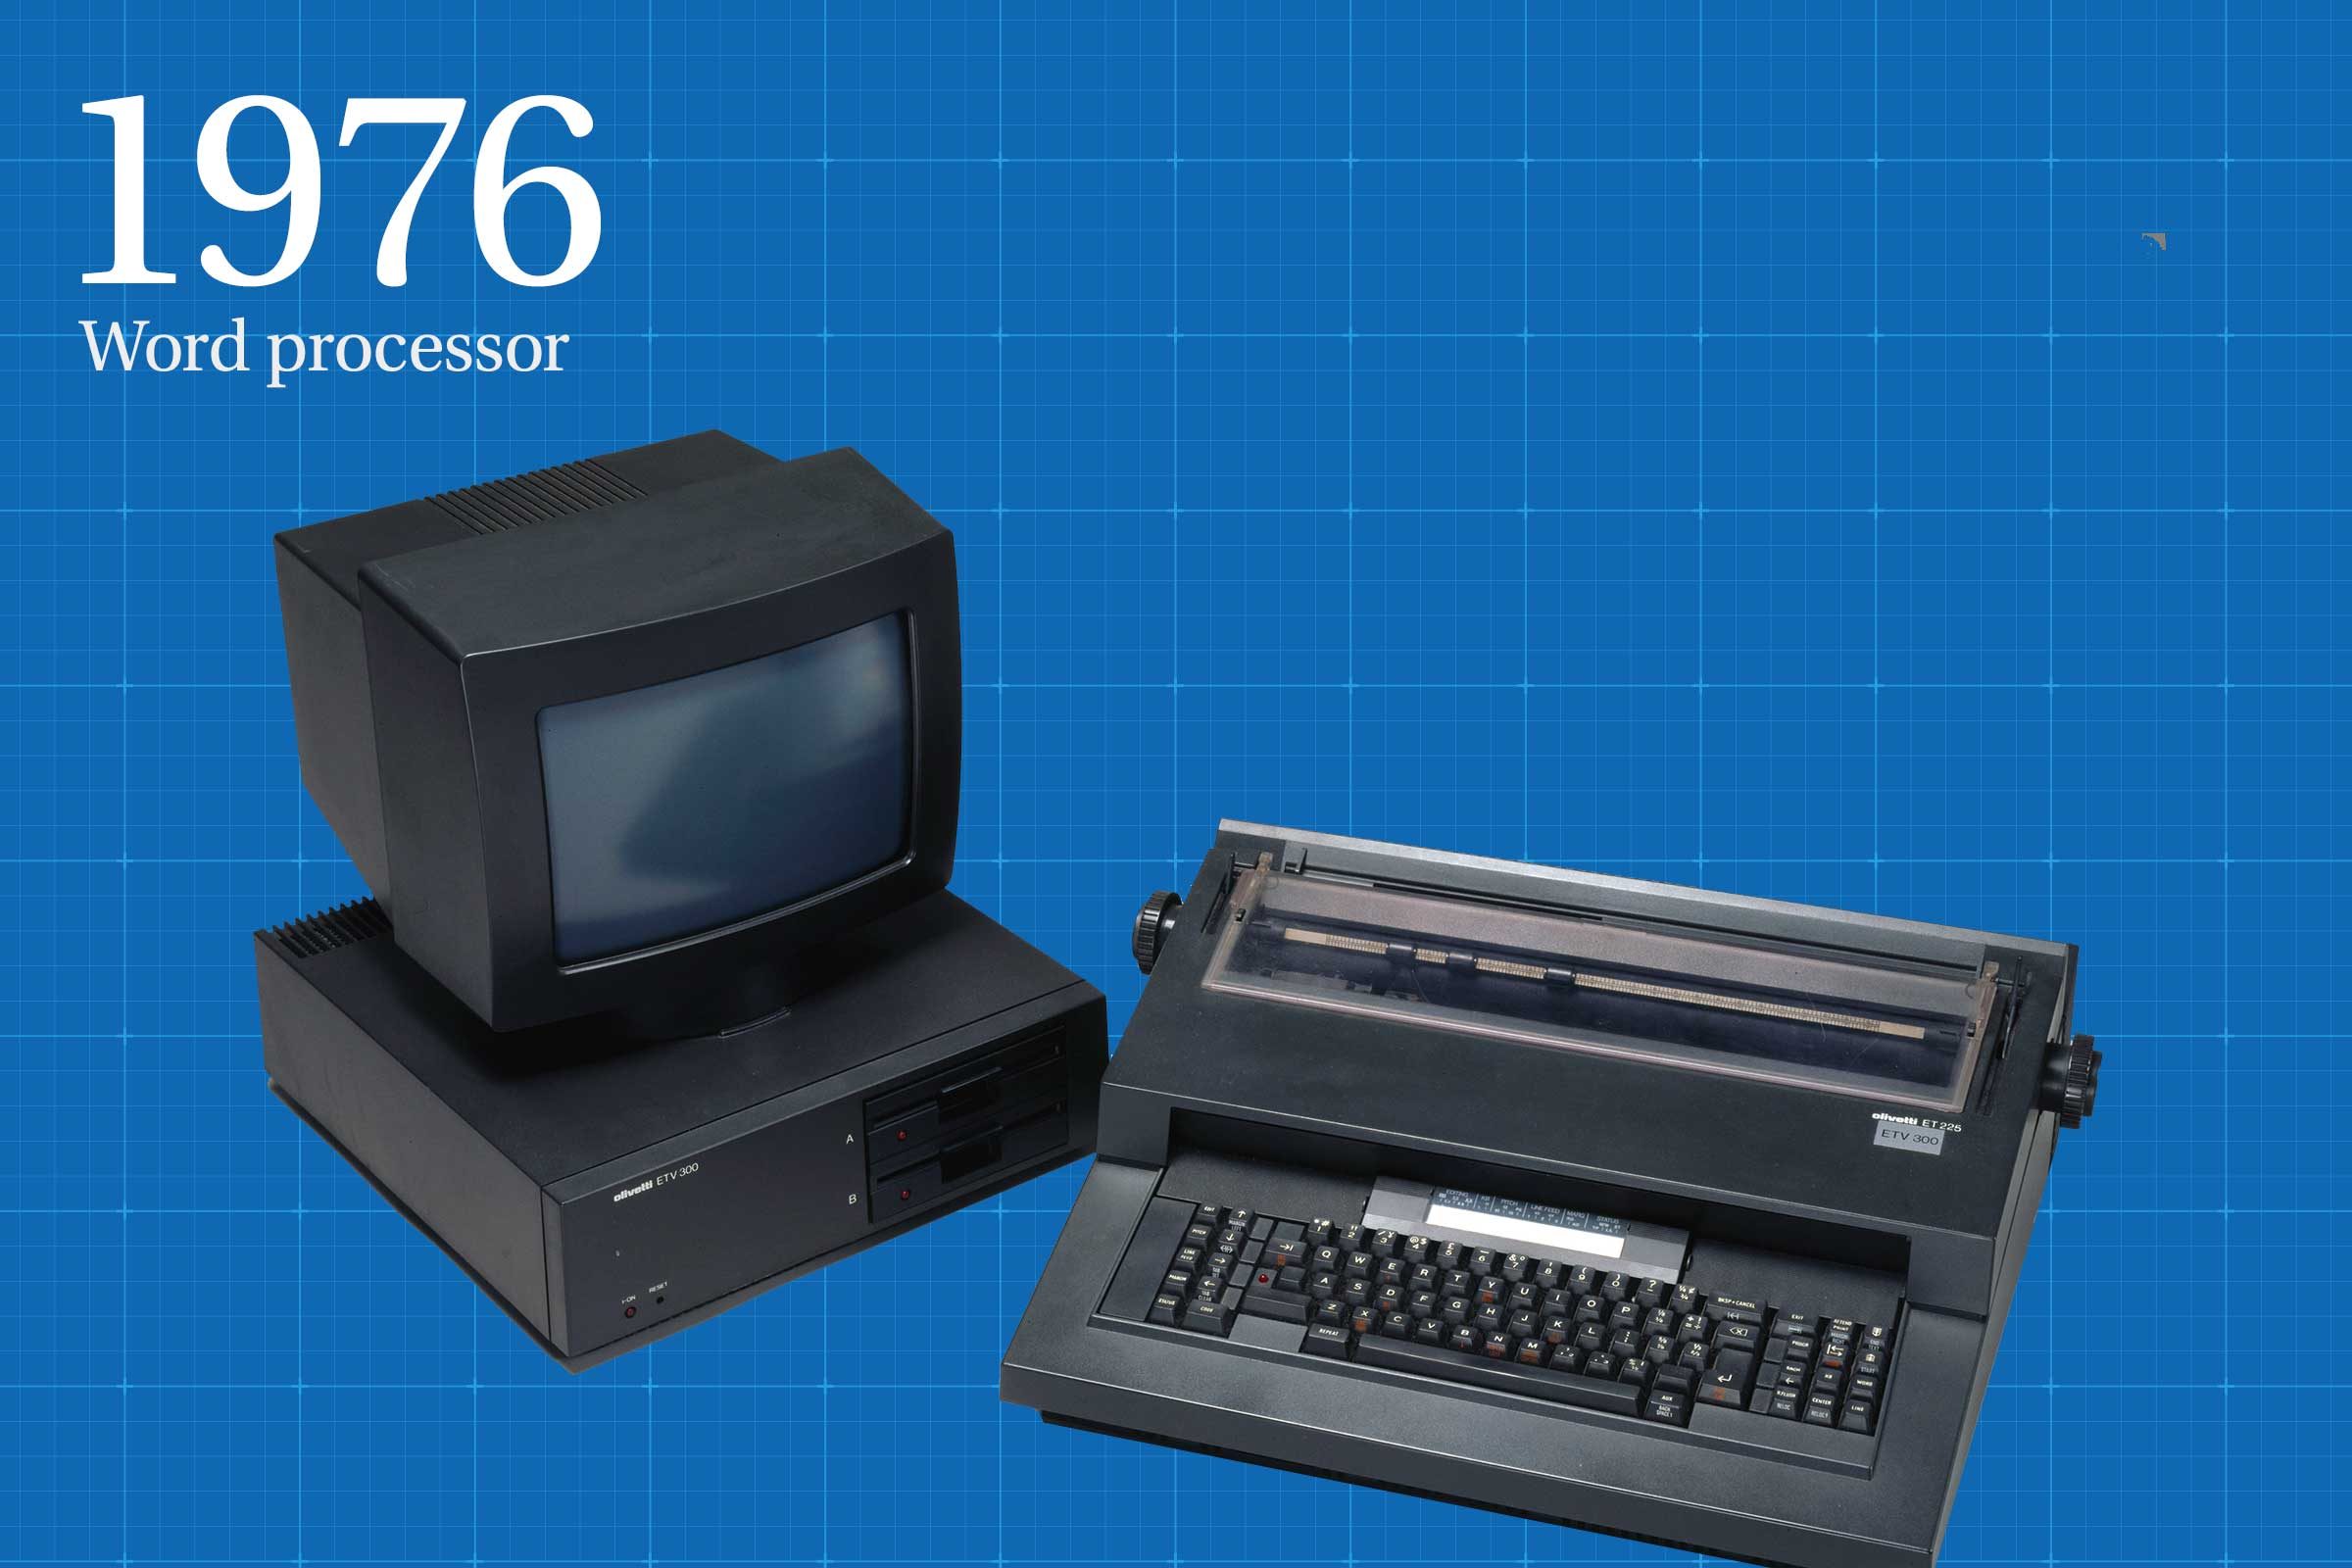 1976: Word processor